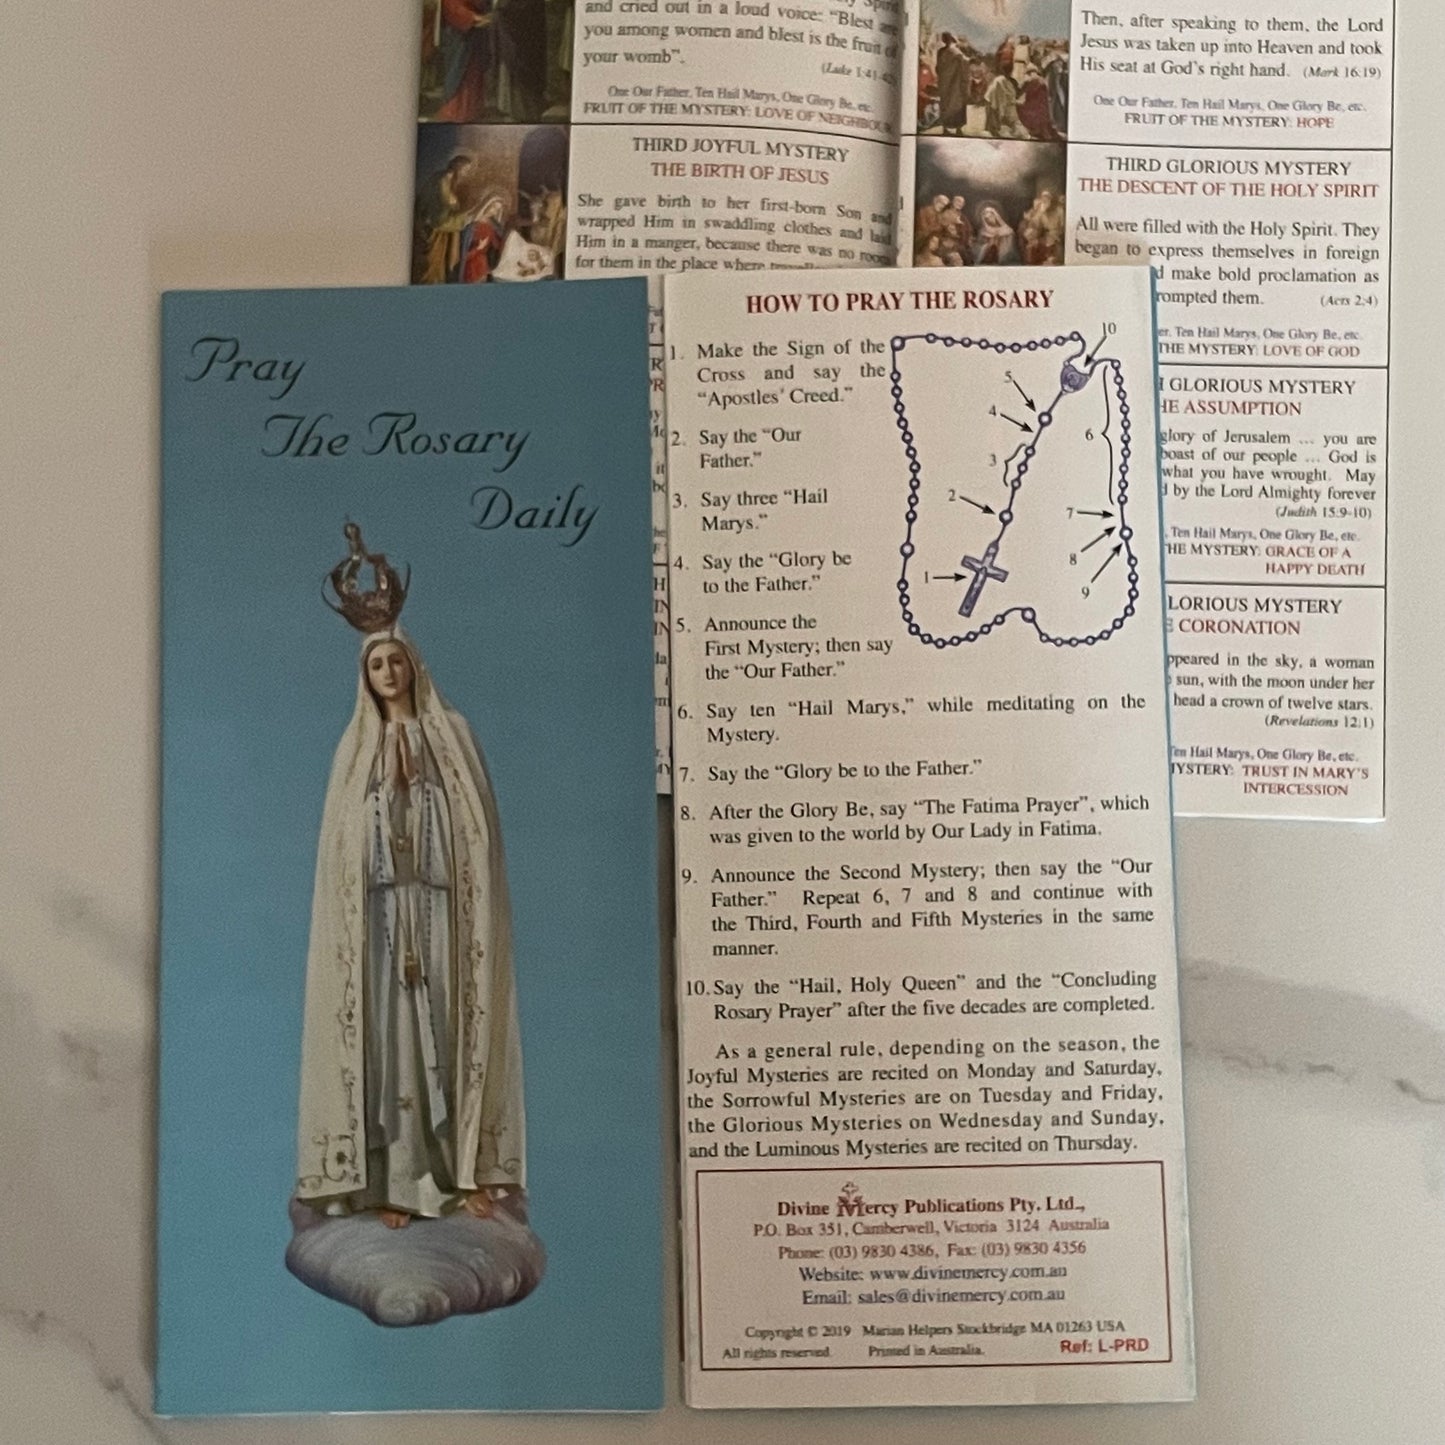 Pray The Rosary Daily leaflet